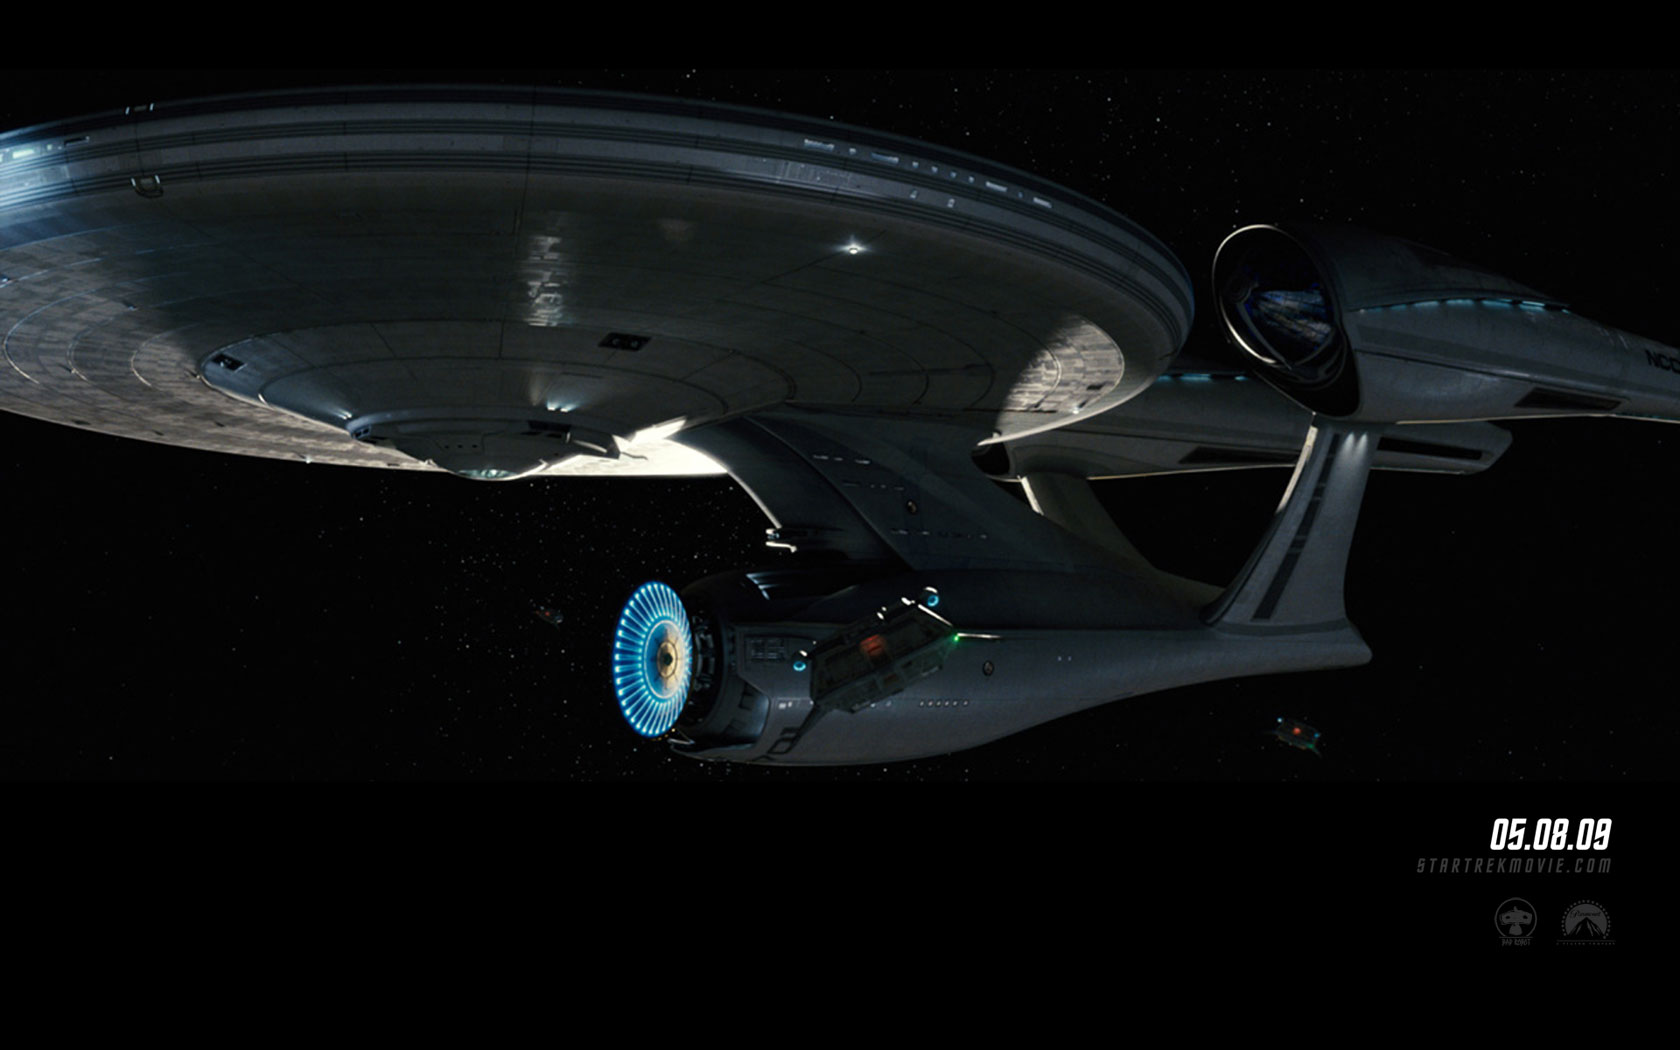 "Star Trek" desktop wallpaper number 10 - the 2009 movie version of the USS Enterprise NCC-1701 (1680 x 1050 pixels)